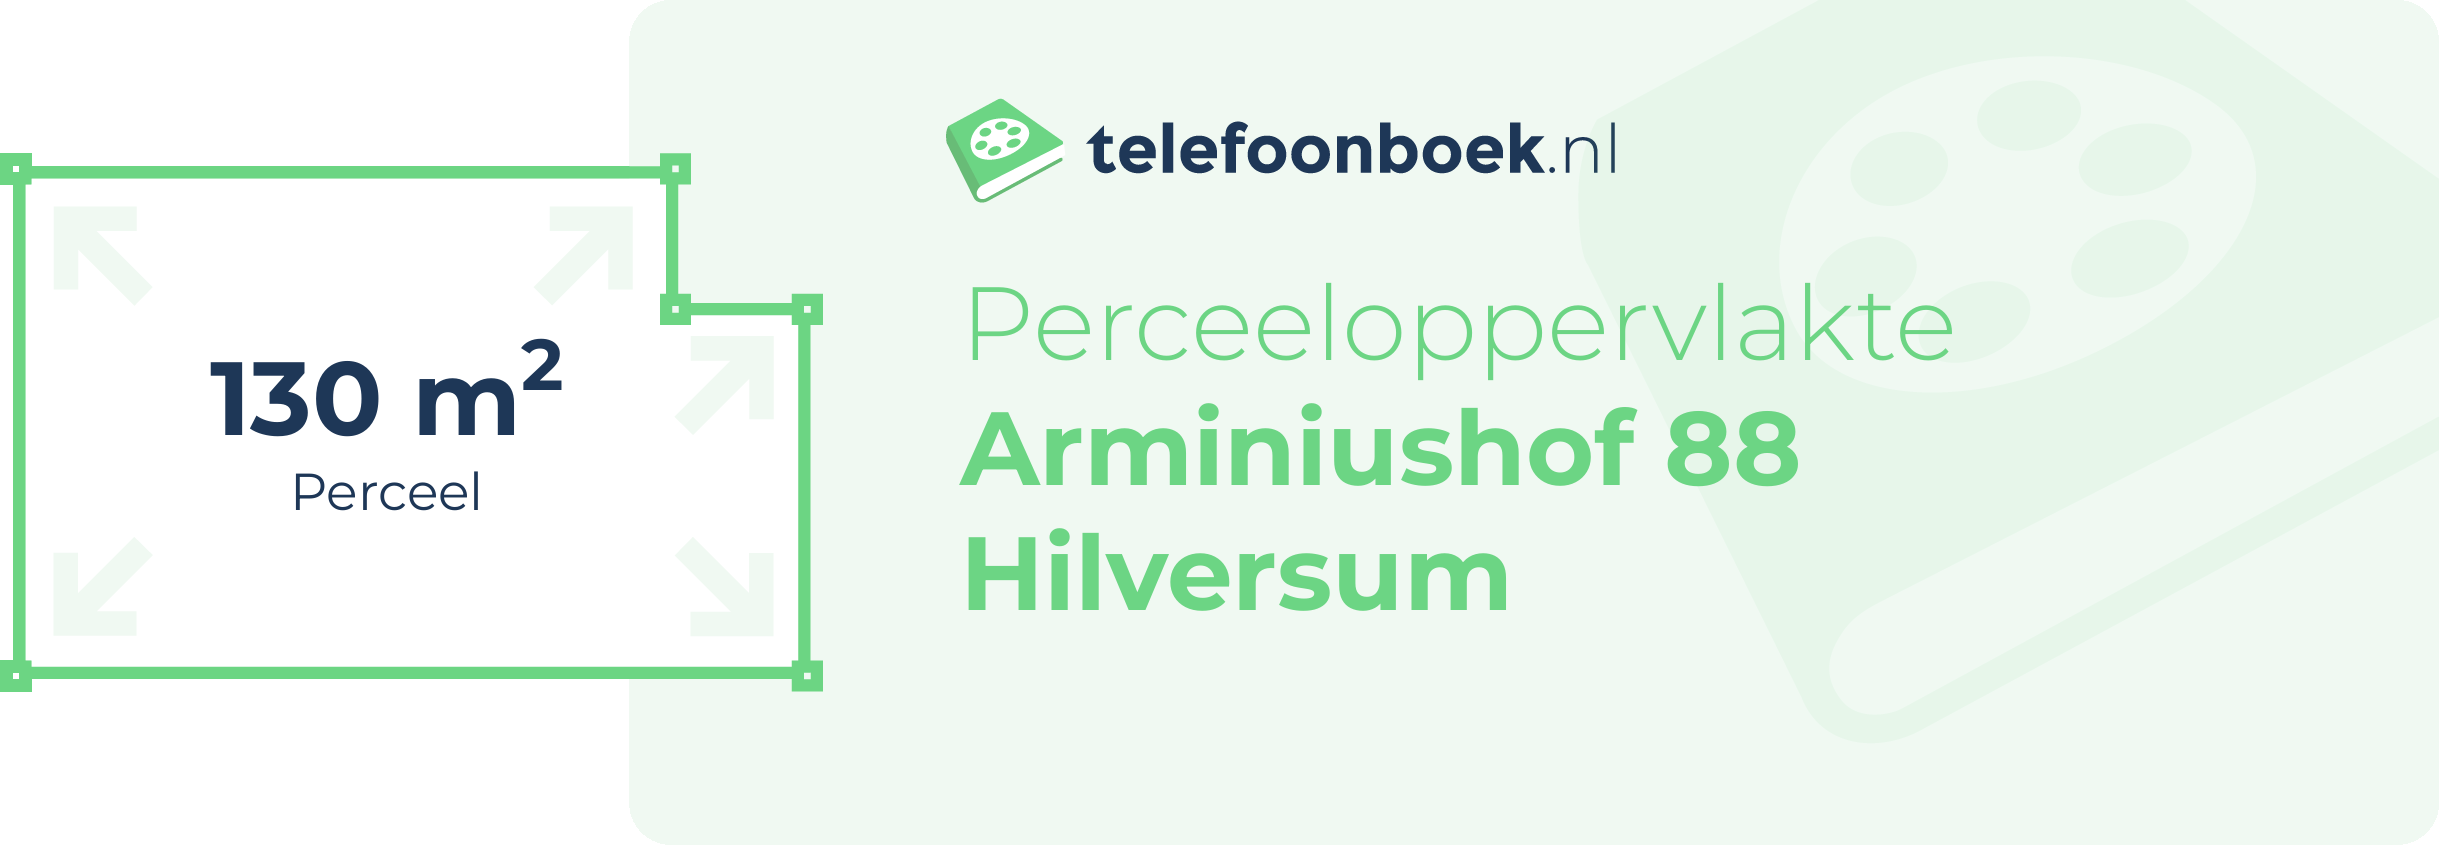 Perceeloppervlakte Arminiushof 88 Hilversum